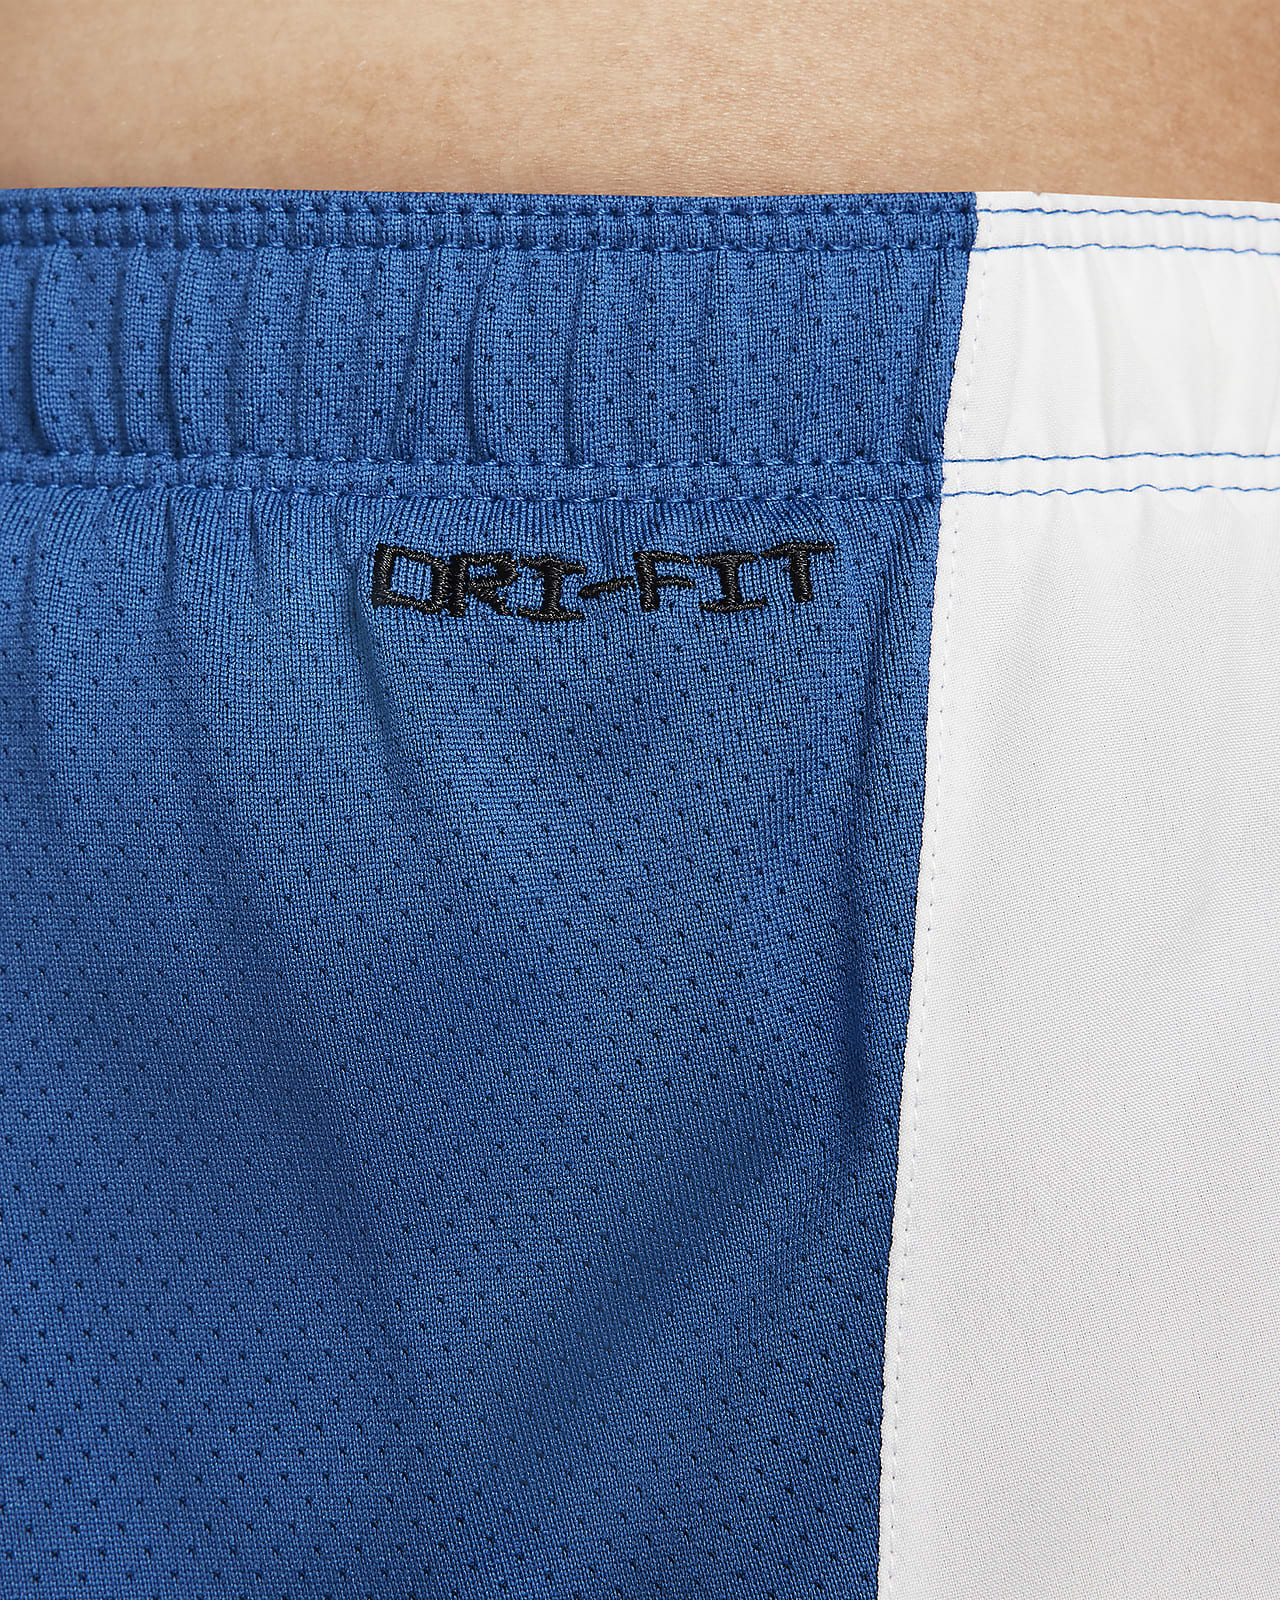 Nike, Dri-FIT Track Club Men's Running Pants, Performance Tracksuit  Bottoms